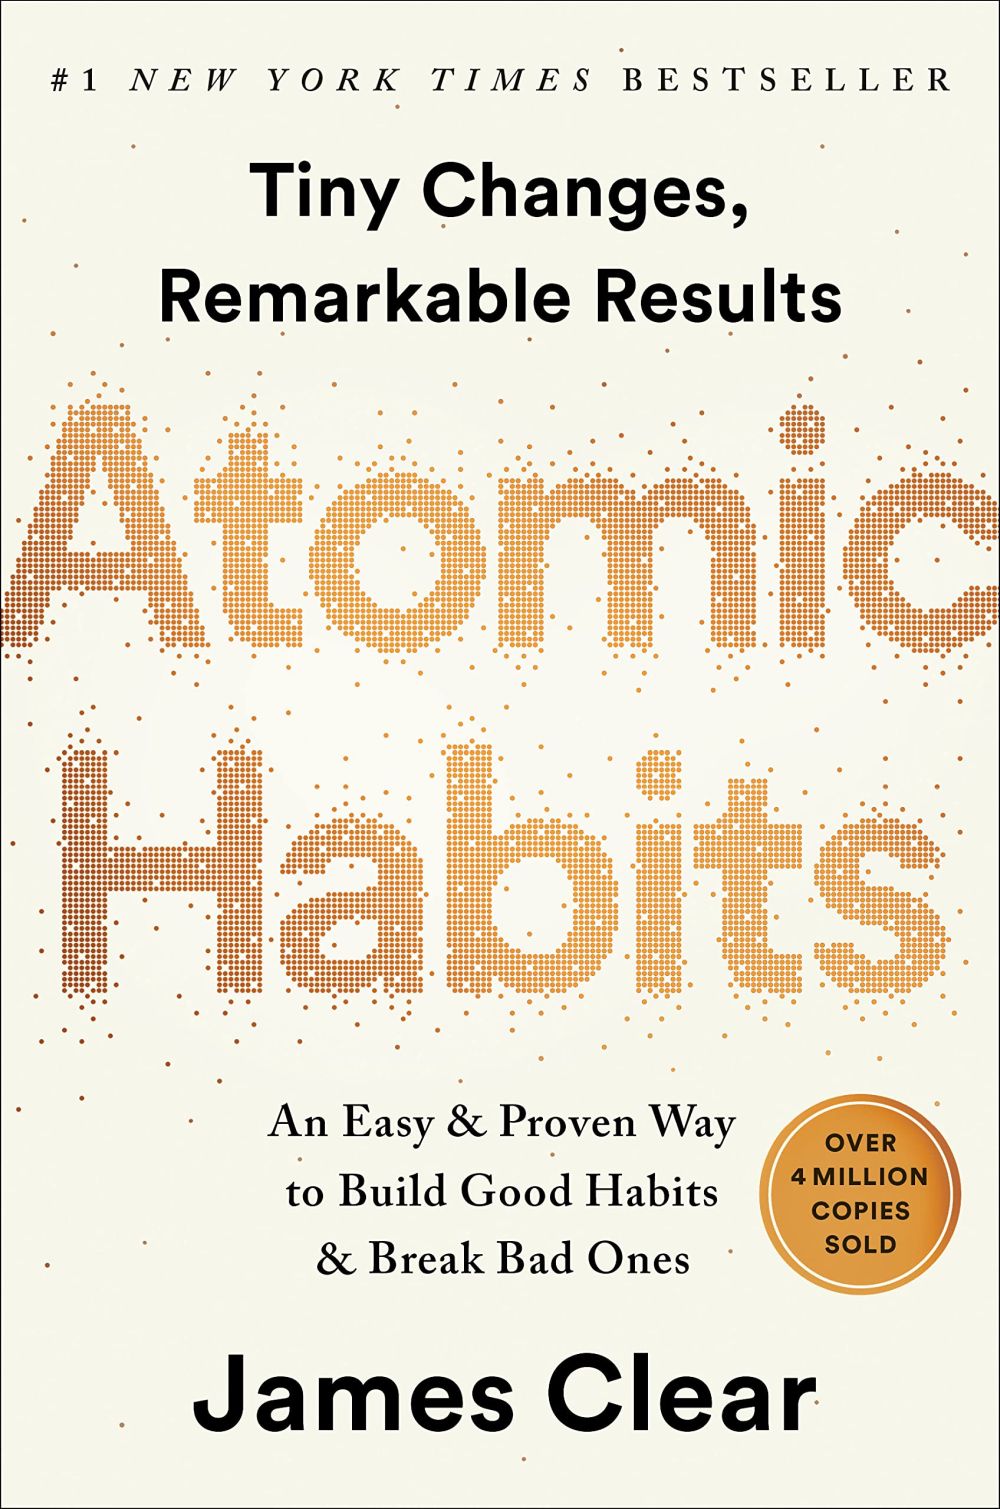 Atomic habits book